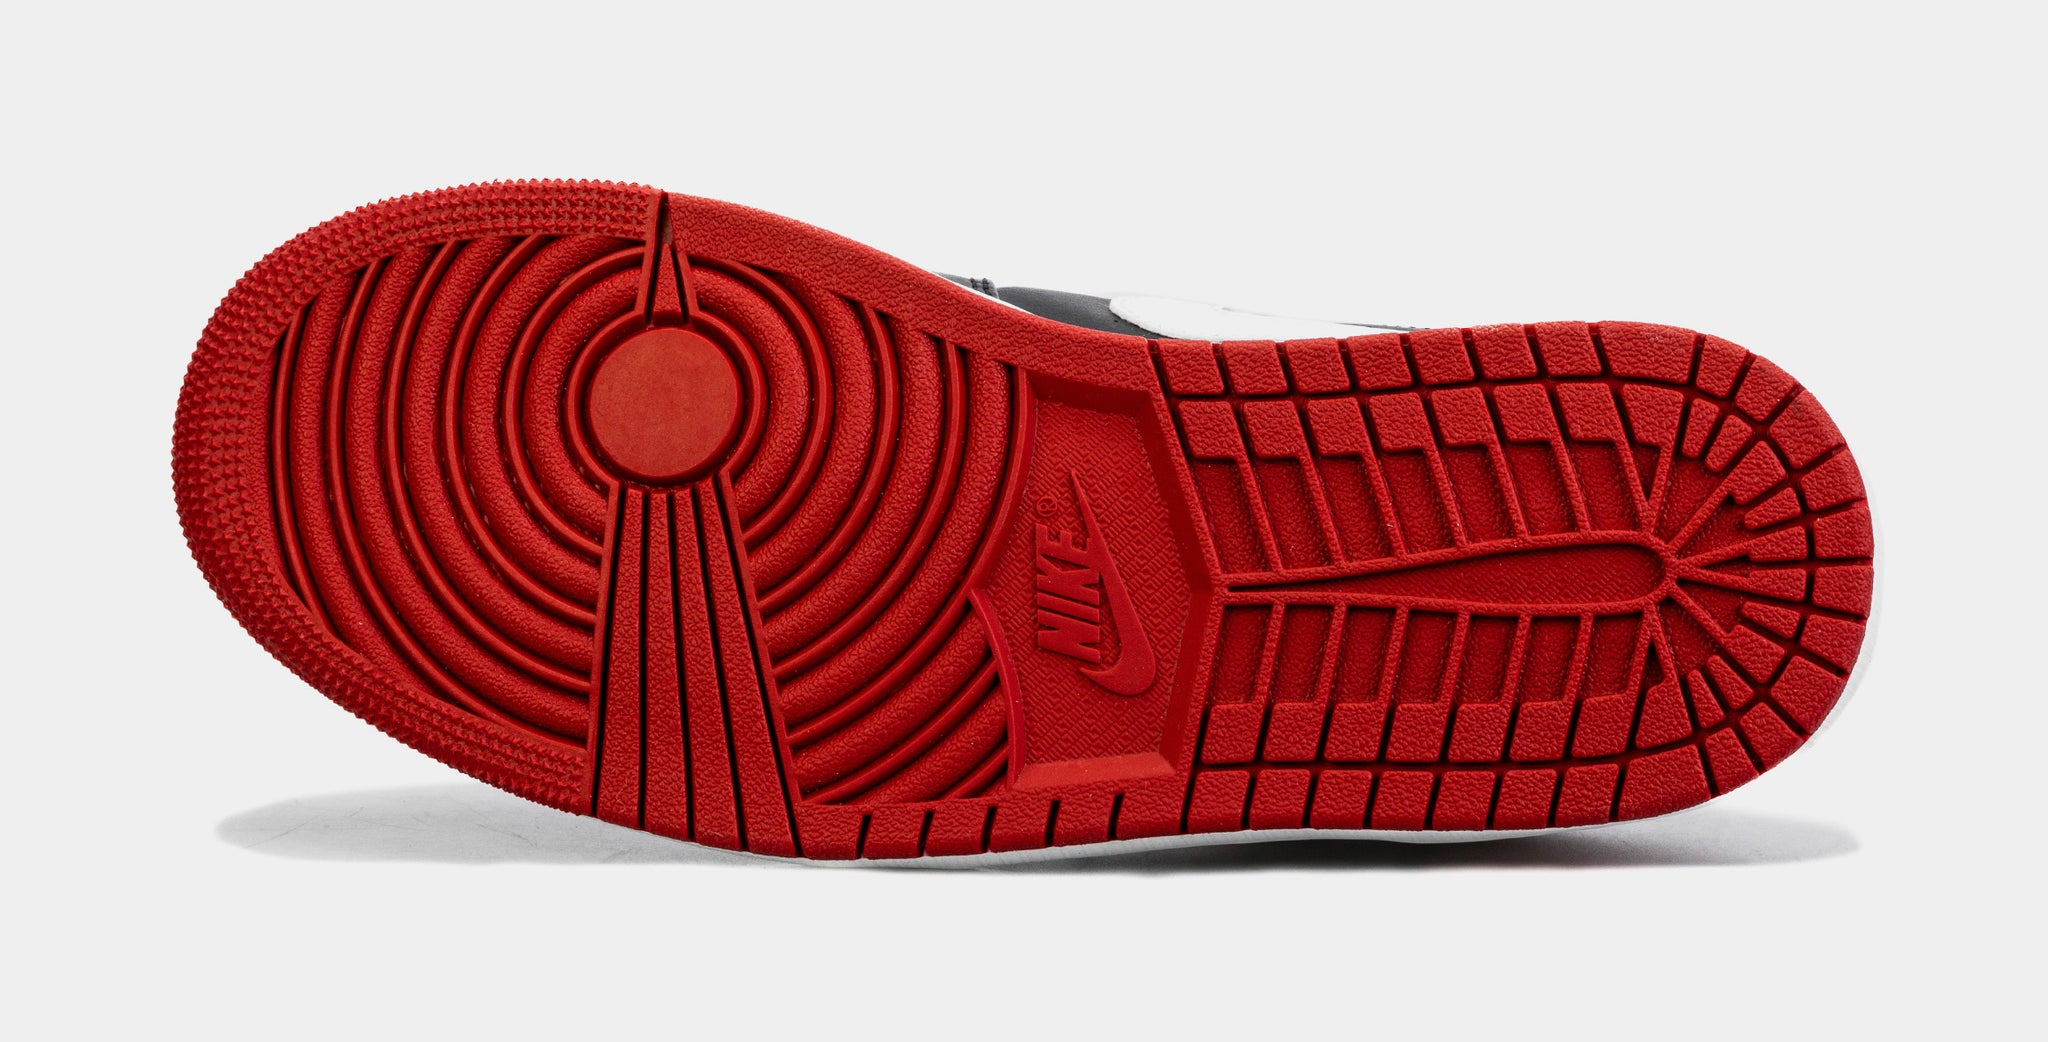 Air Jordan 1 Retro Low Alternate Bred Toe Mens Lifestyle Shoes (Black/Red)